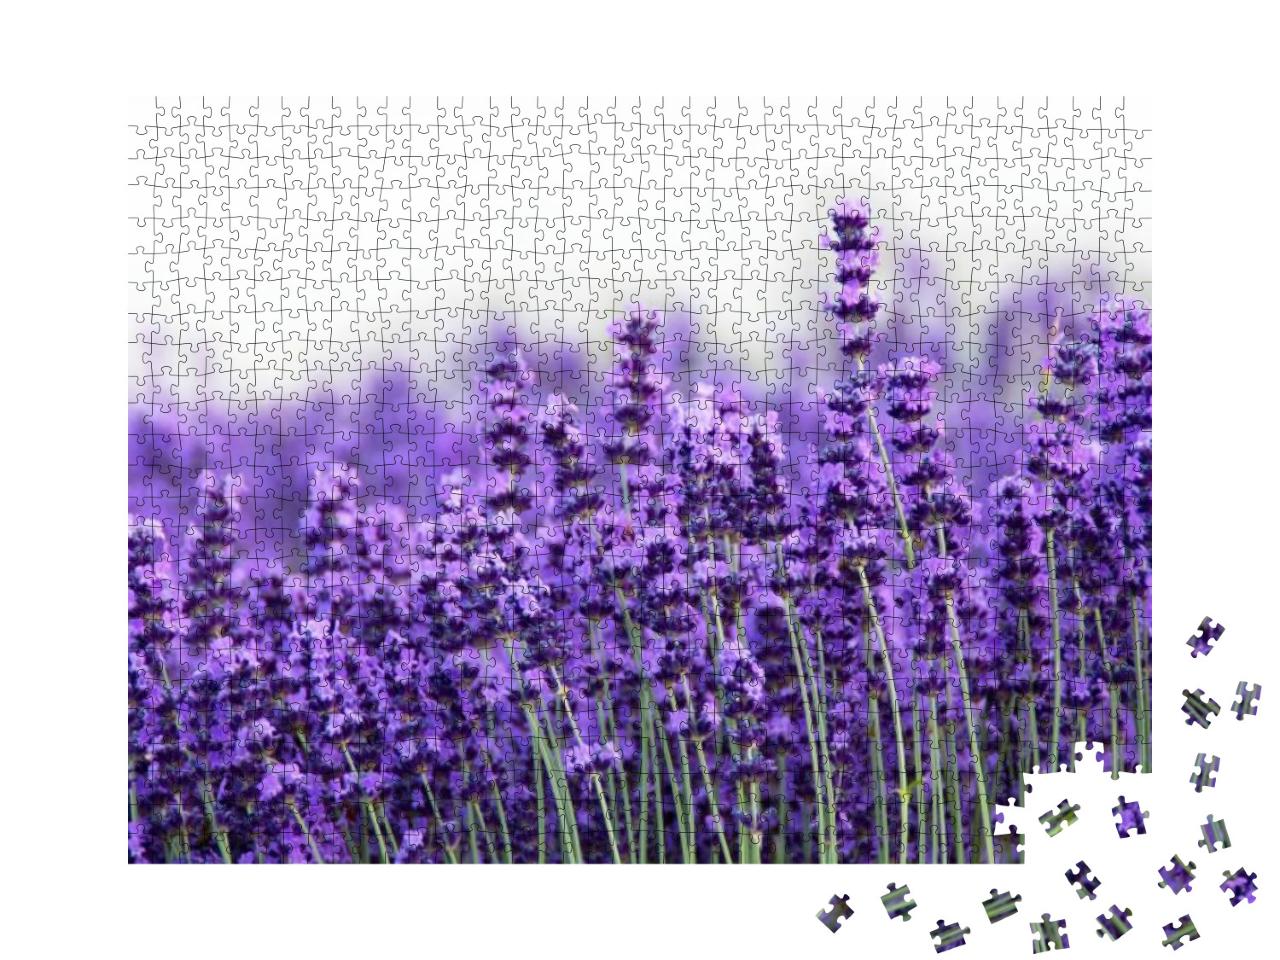 Puzzle 1000 Teile „Lavendel“